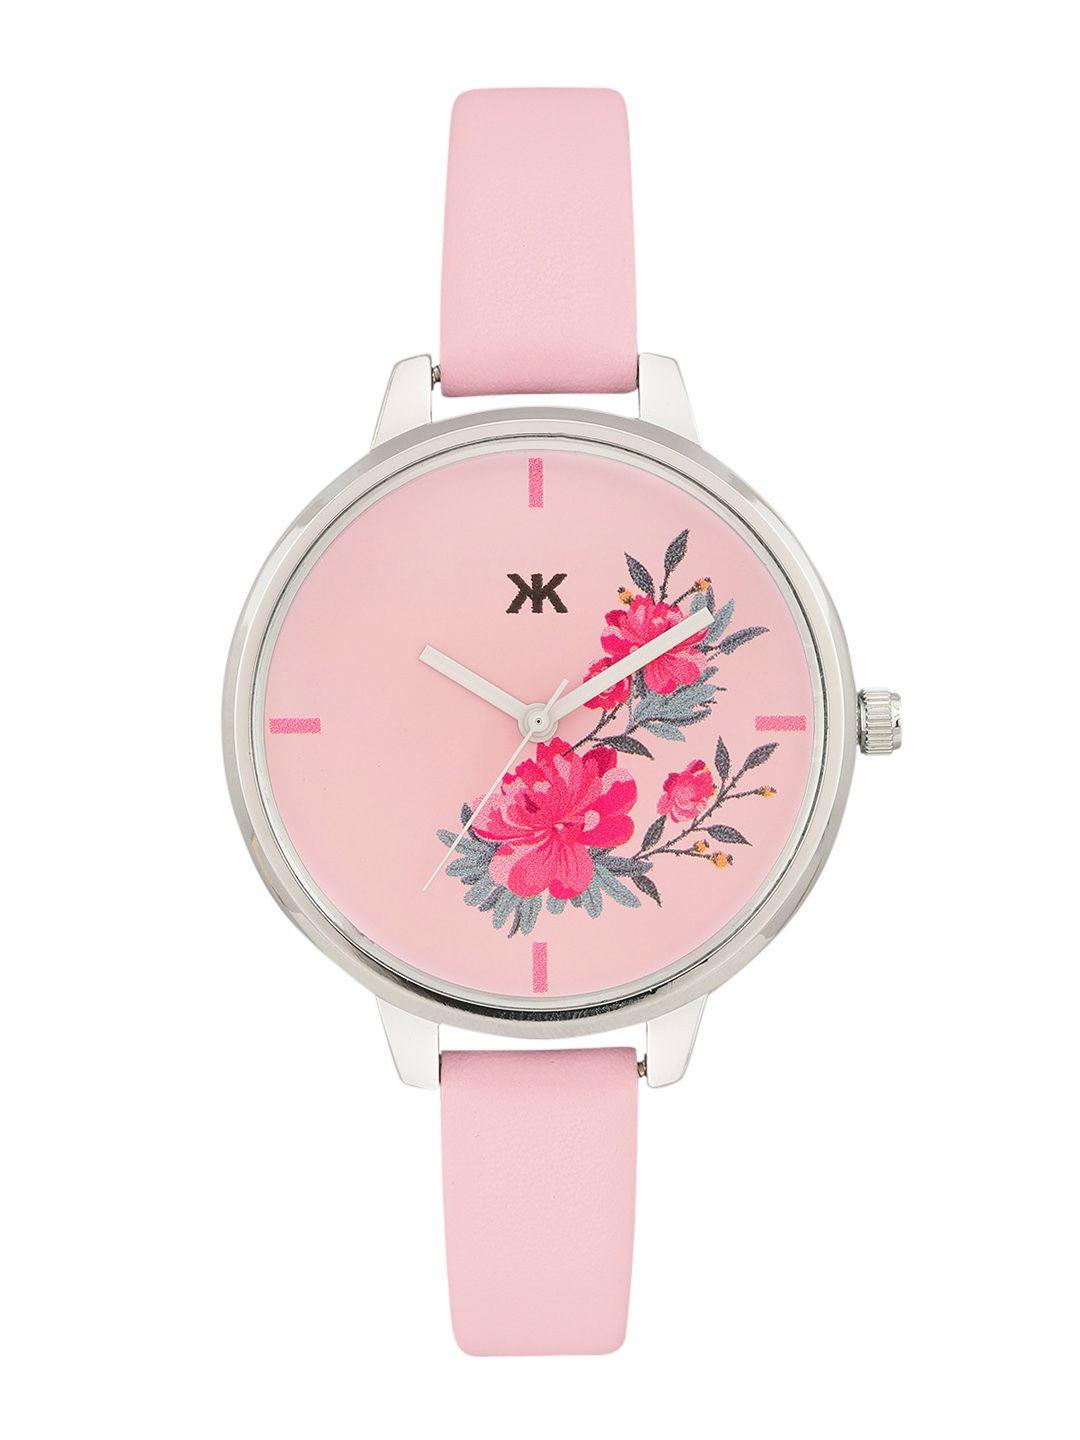 kook n keech women pink floral printed analogue watch knk22-7b-pink